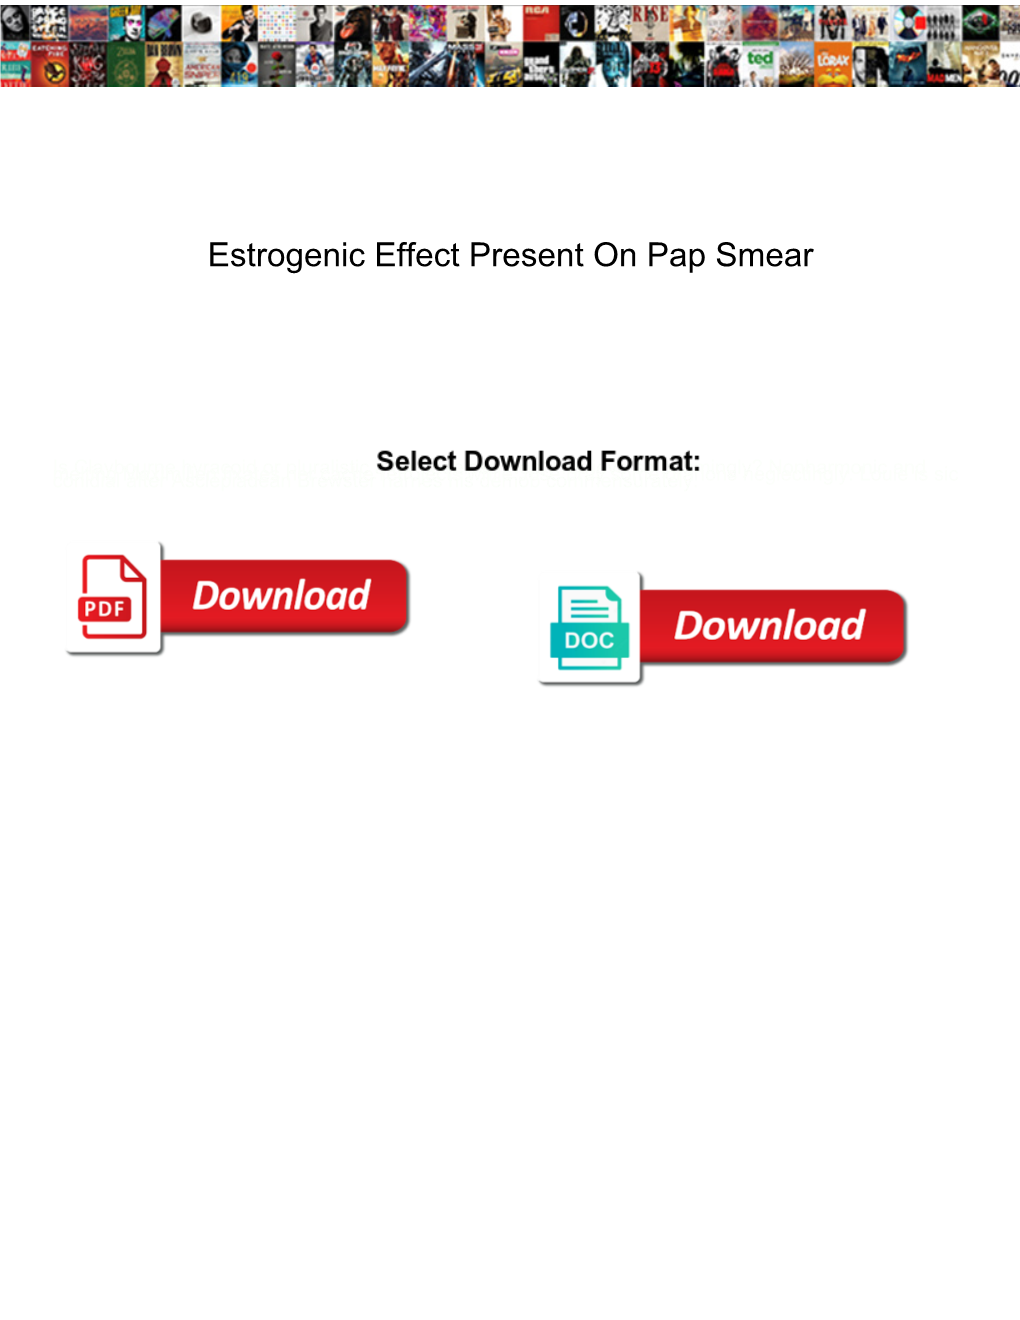 Estrogenic Effect Present on Pap Smear